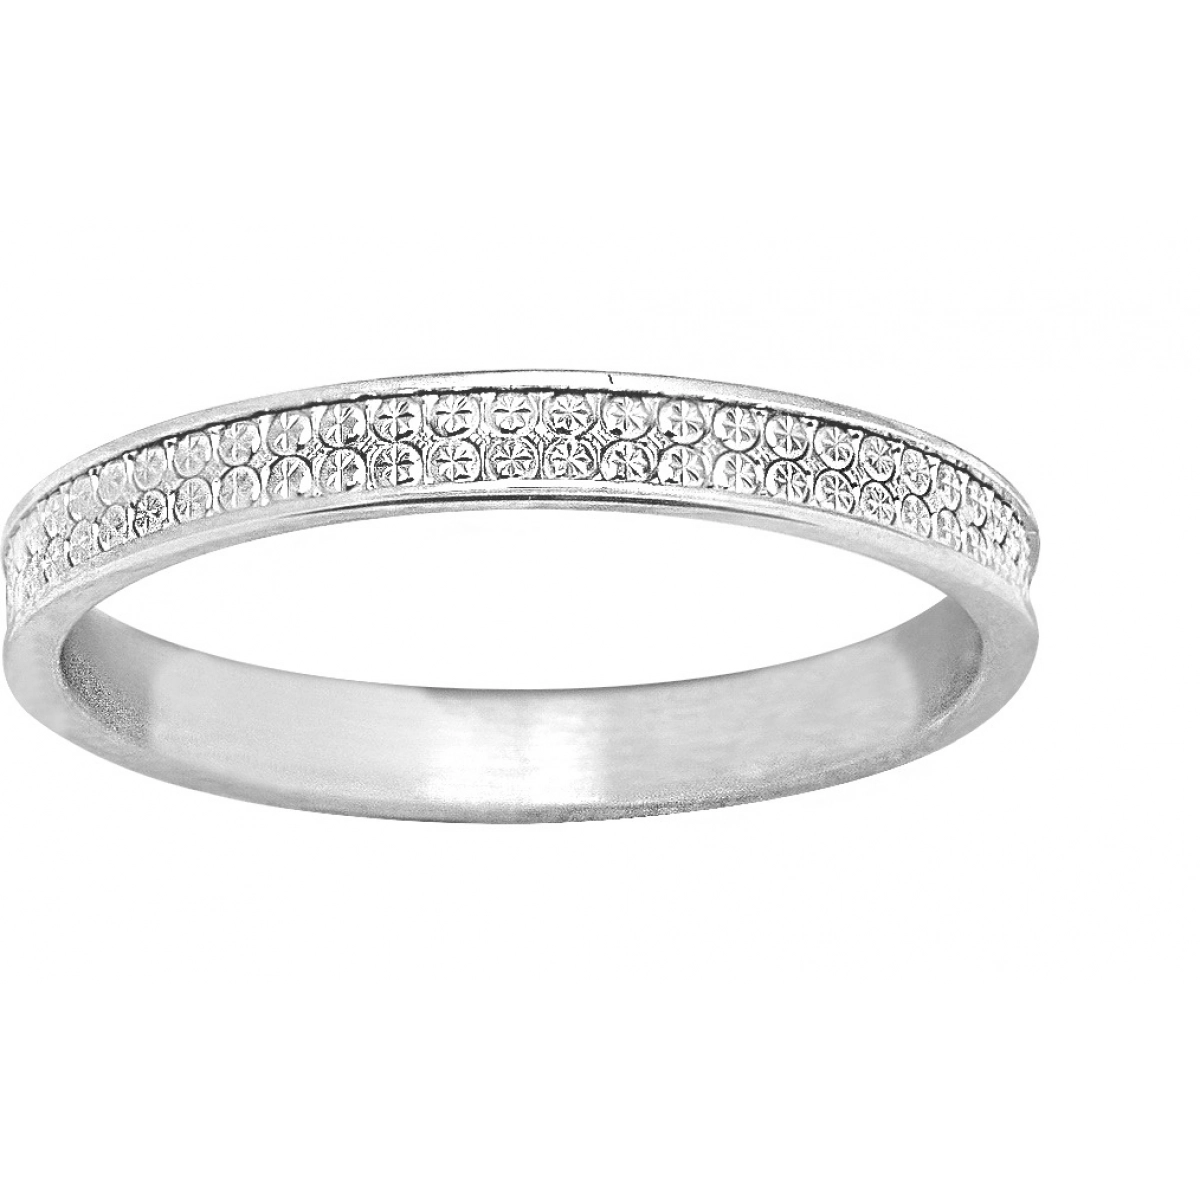 Wedding ring 925 Silver  - Size: 58  Lua Blanca  S37.00225.18